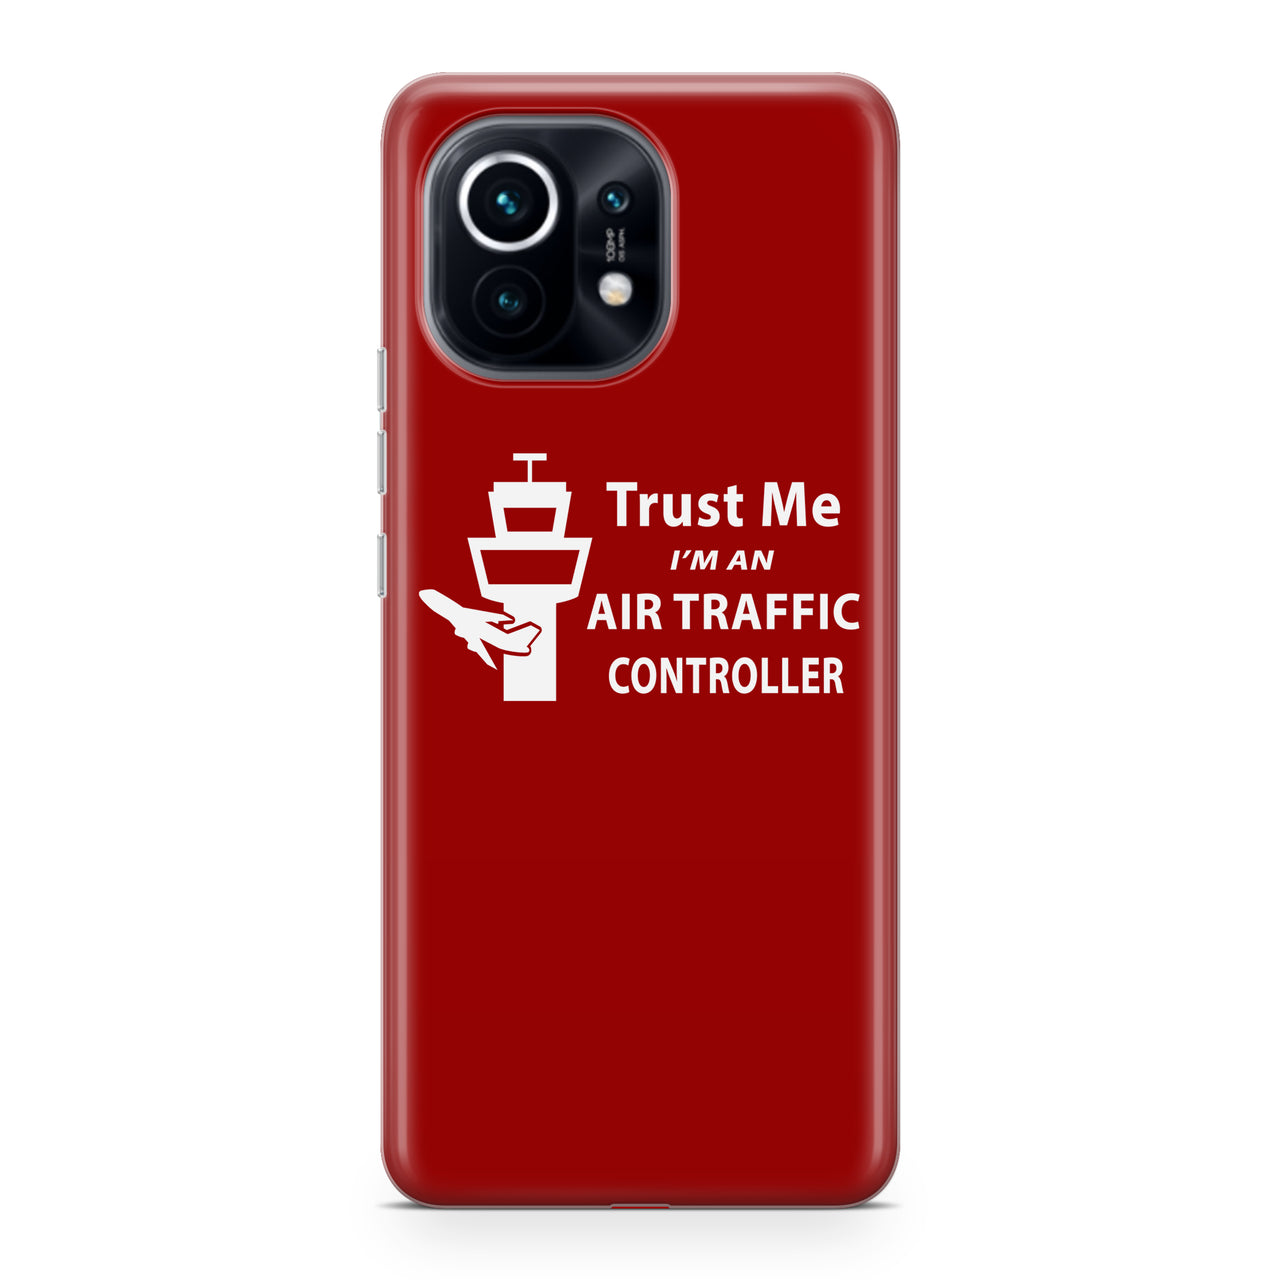 Trust Me I'm an Air Traffic Controller Designed Xiaomi Cases